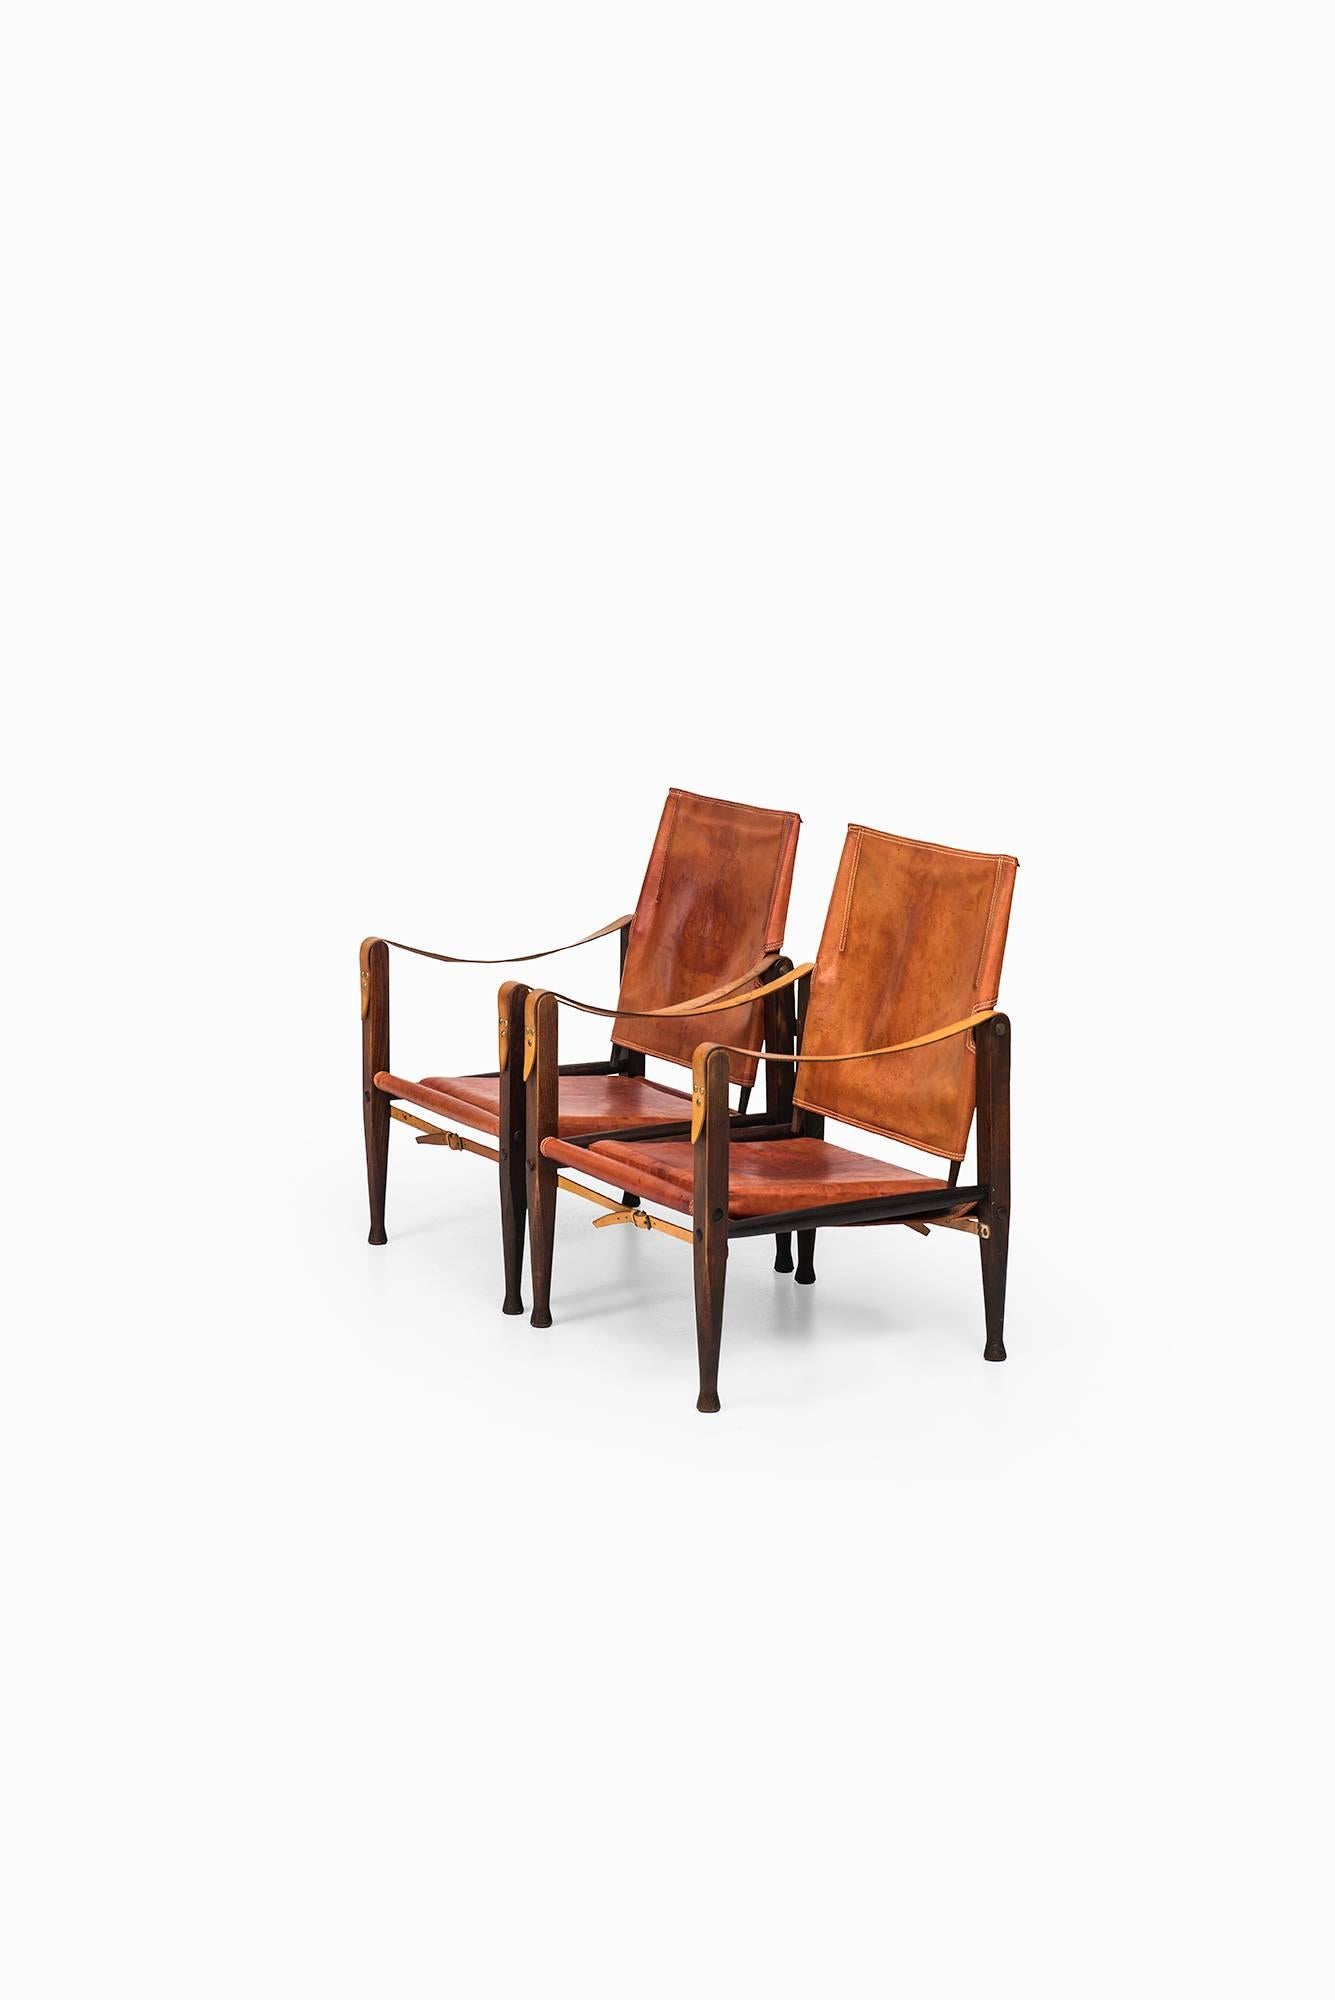 Scandinavian Modern Kaare Klint Safari Chairs by Rud Rasmussen in Denmark